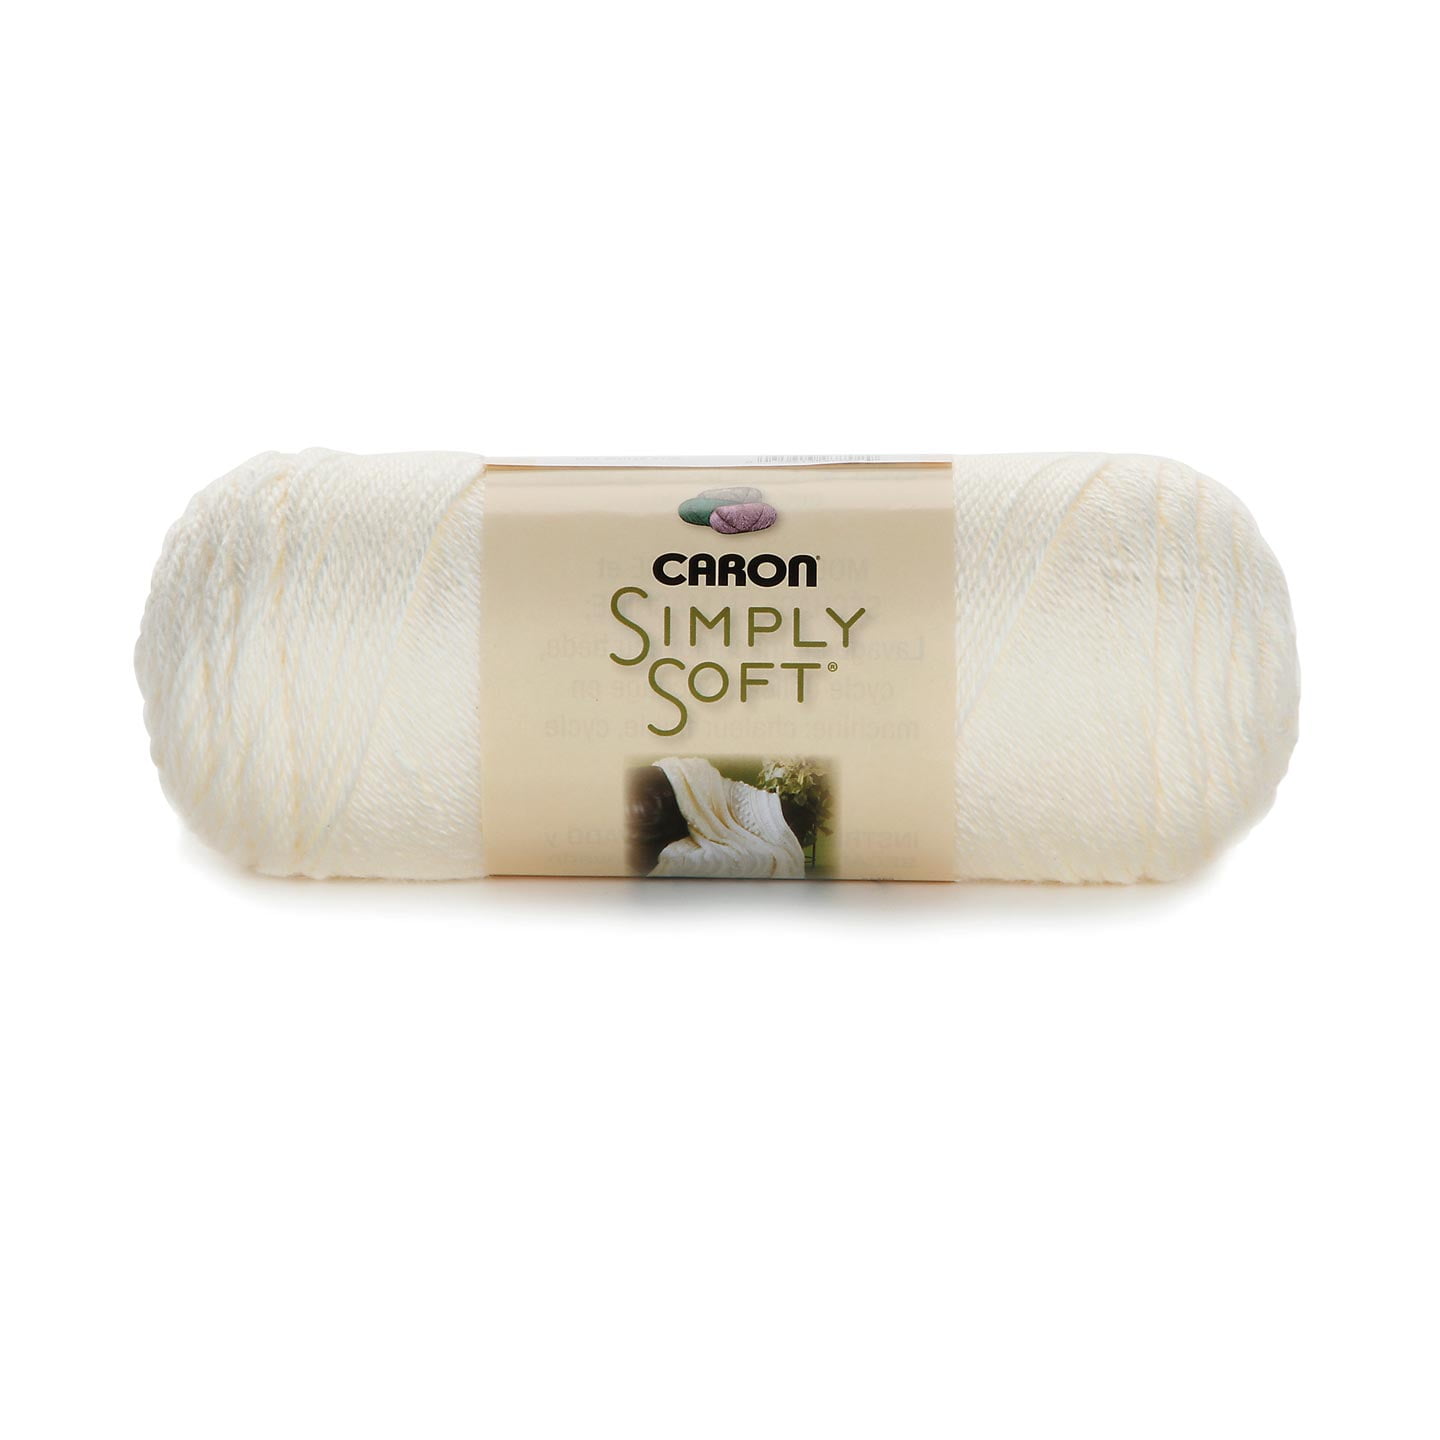 Caron Simply Soft Yarn - Plum